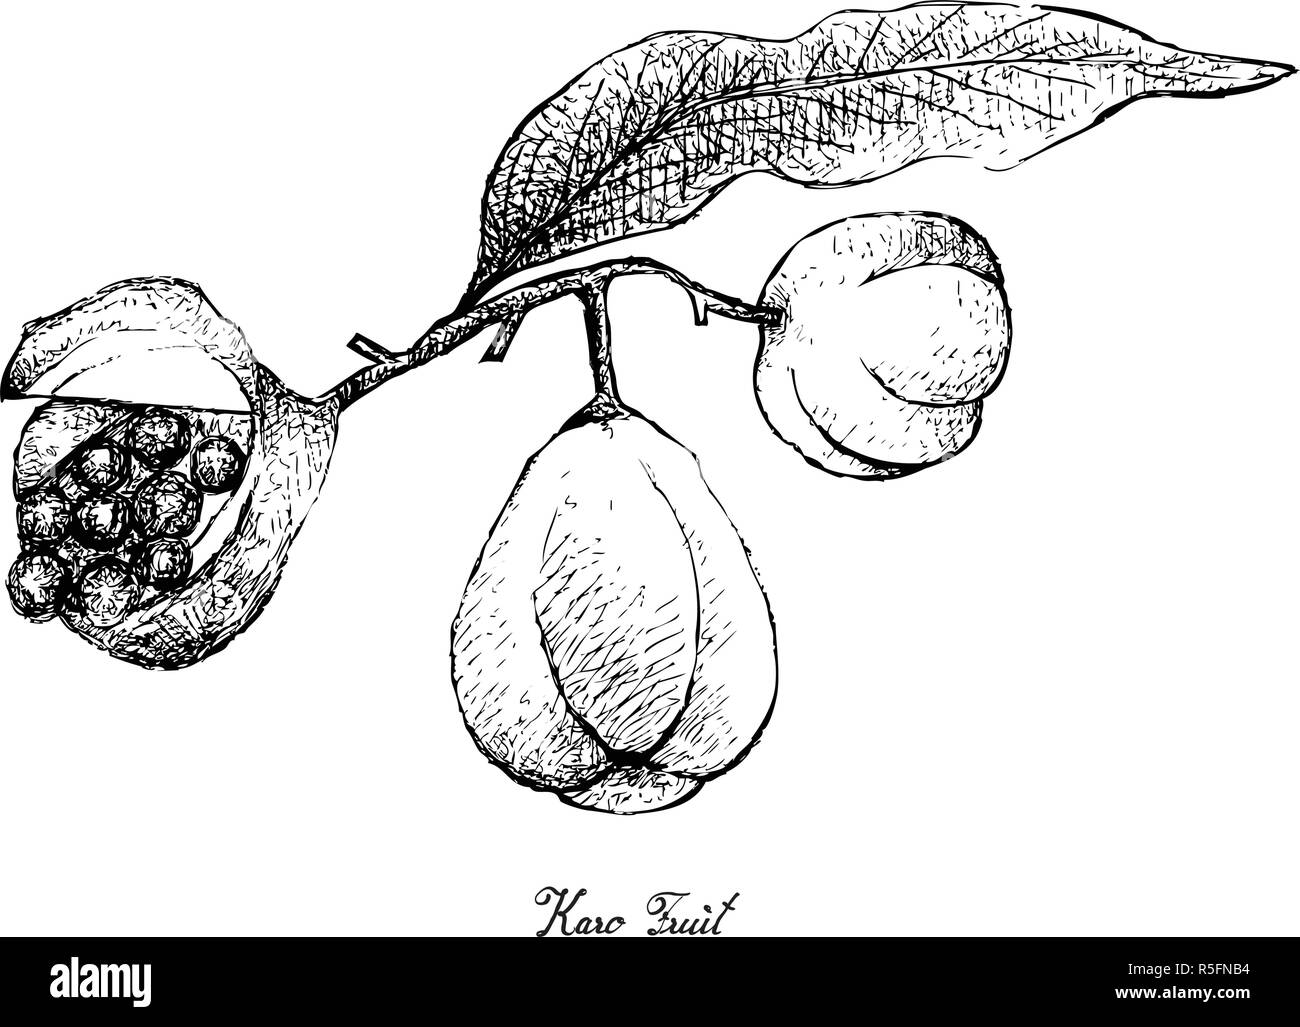 Tropical Fruit, Illustration of Hand Drawn Sketch Pittosporum Crassifolium or Karo Fruits Isolated on White Background. Stock Vector